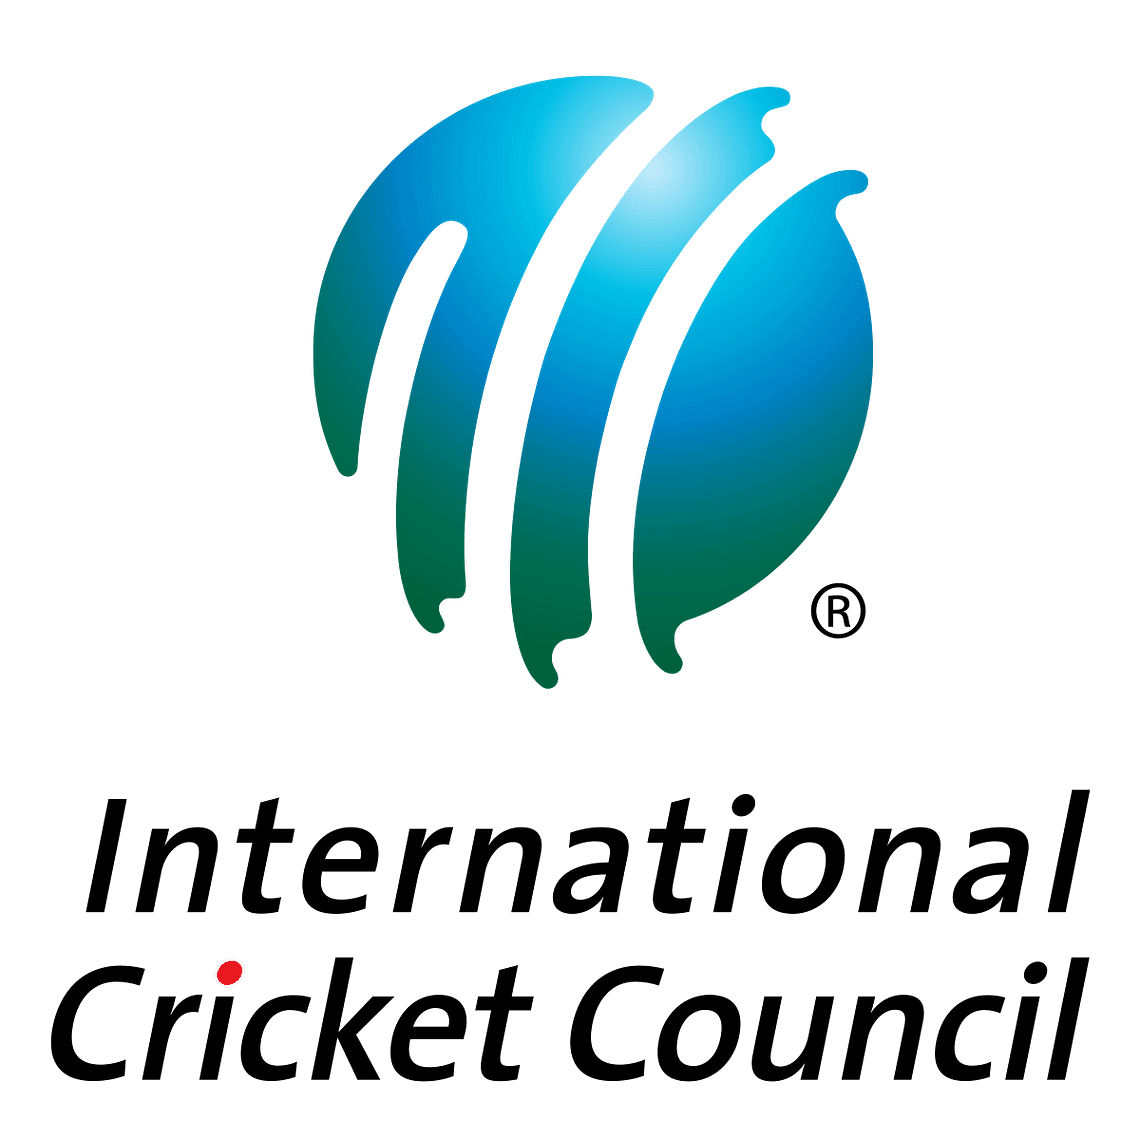 International Cricket Council (logo).svg